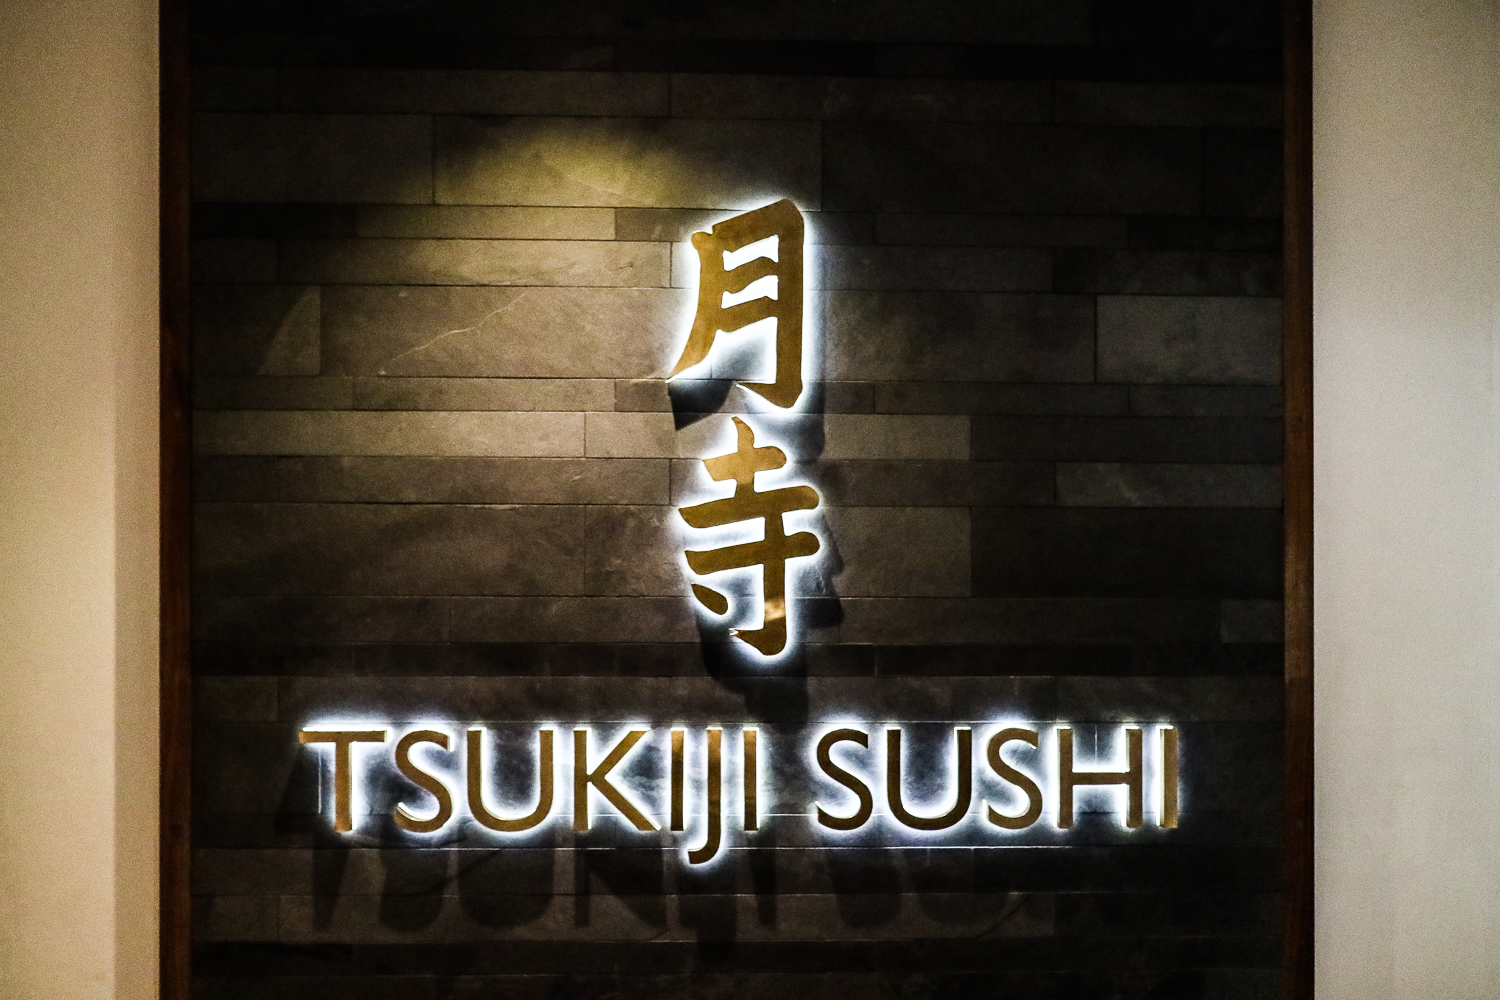 Tsukiji-Sushi-4 Dinner at the Tsukiji Sushi Restaurant Mayfair